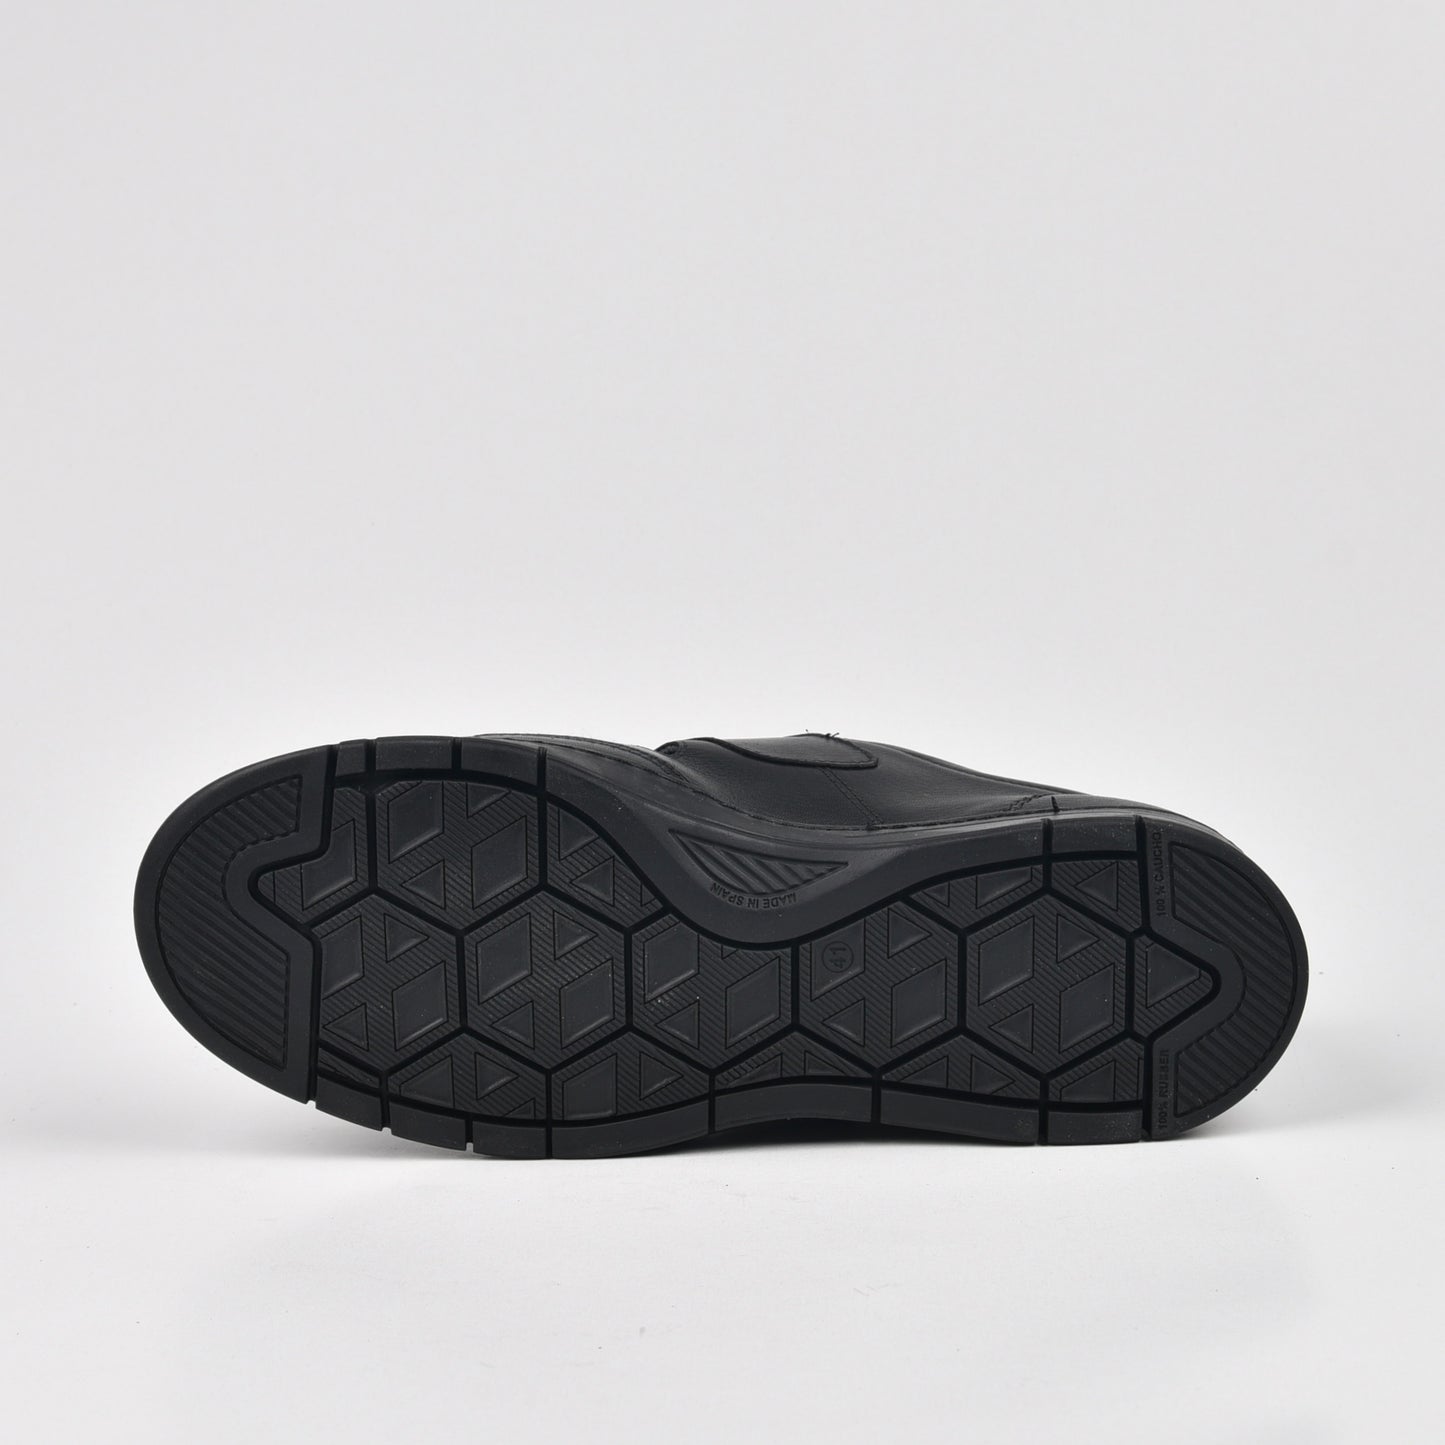 Pitillos Spanish sandals for men in black